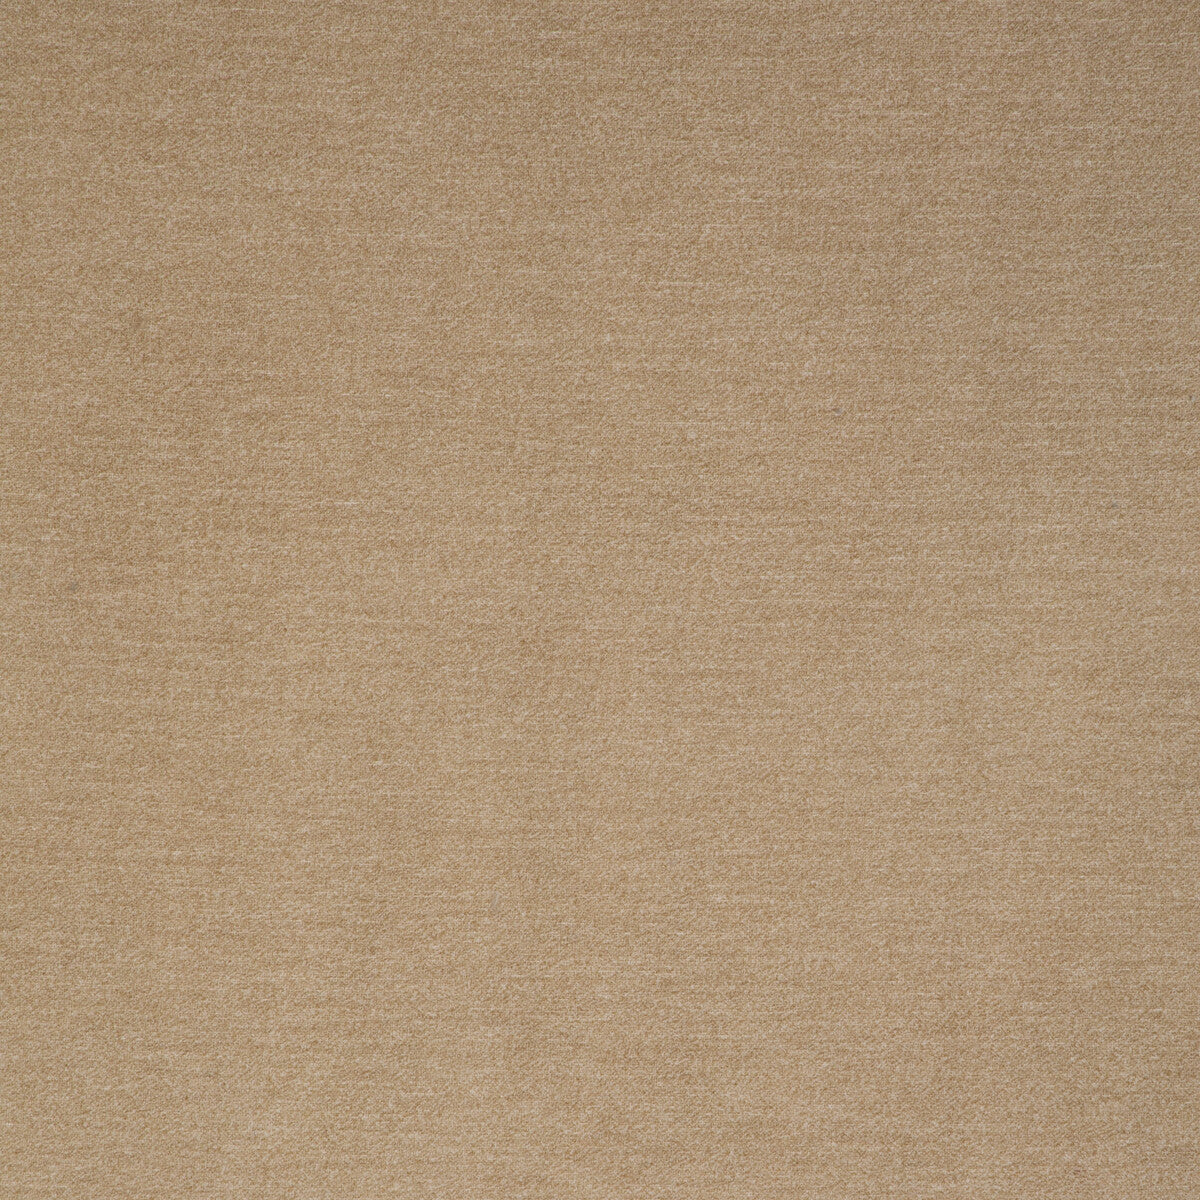 Kravet Smart fabric in 37000-116 color - pattern 37000.116.0 - by Kravet Smart in the Performance Kravetarmor collection